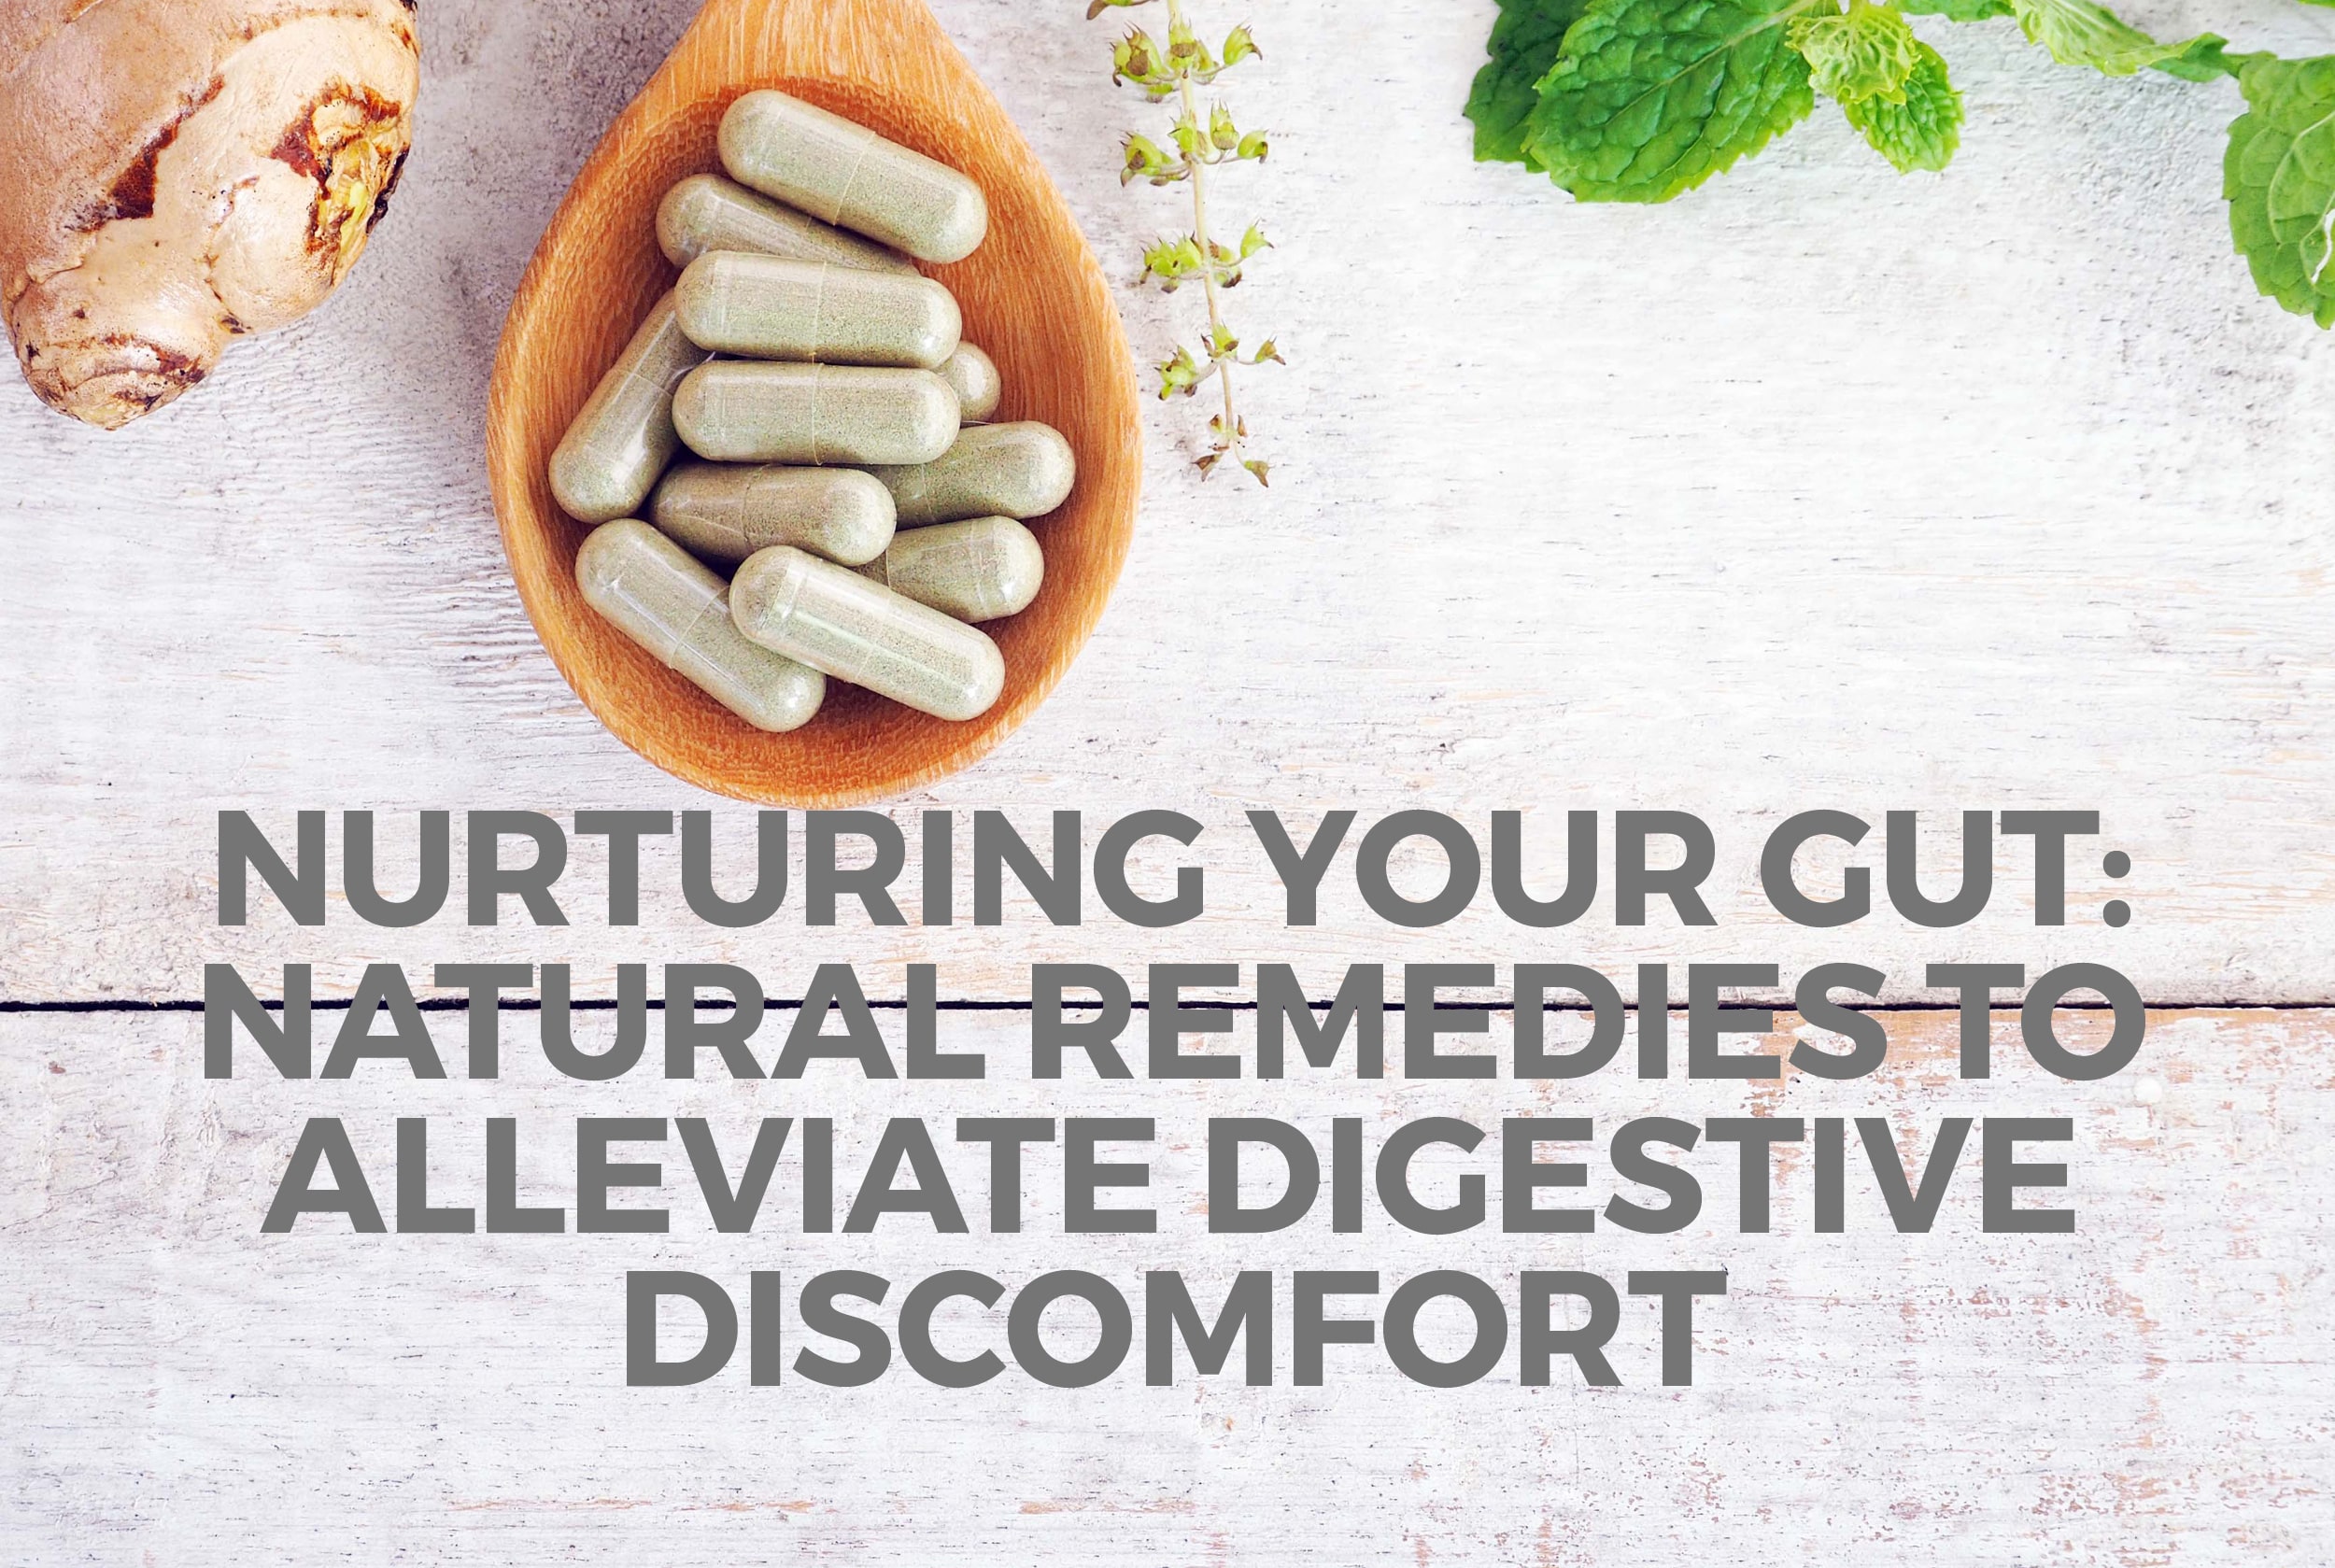 Nurture your gut with natural remedies to alleviate digestive discomfort